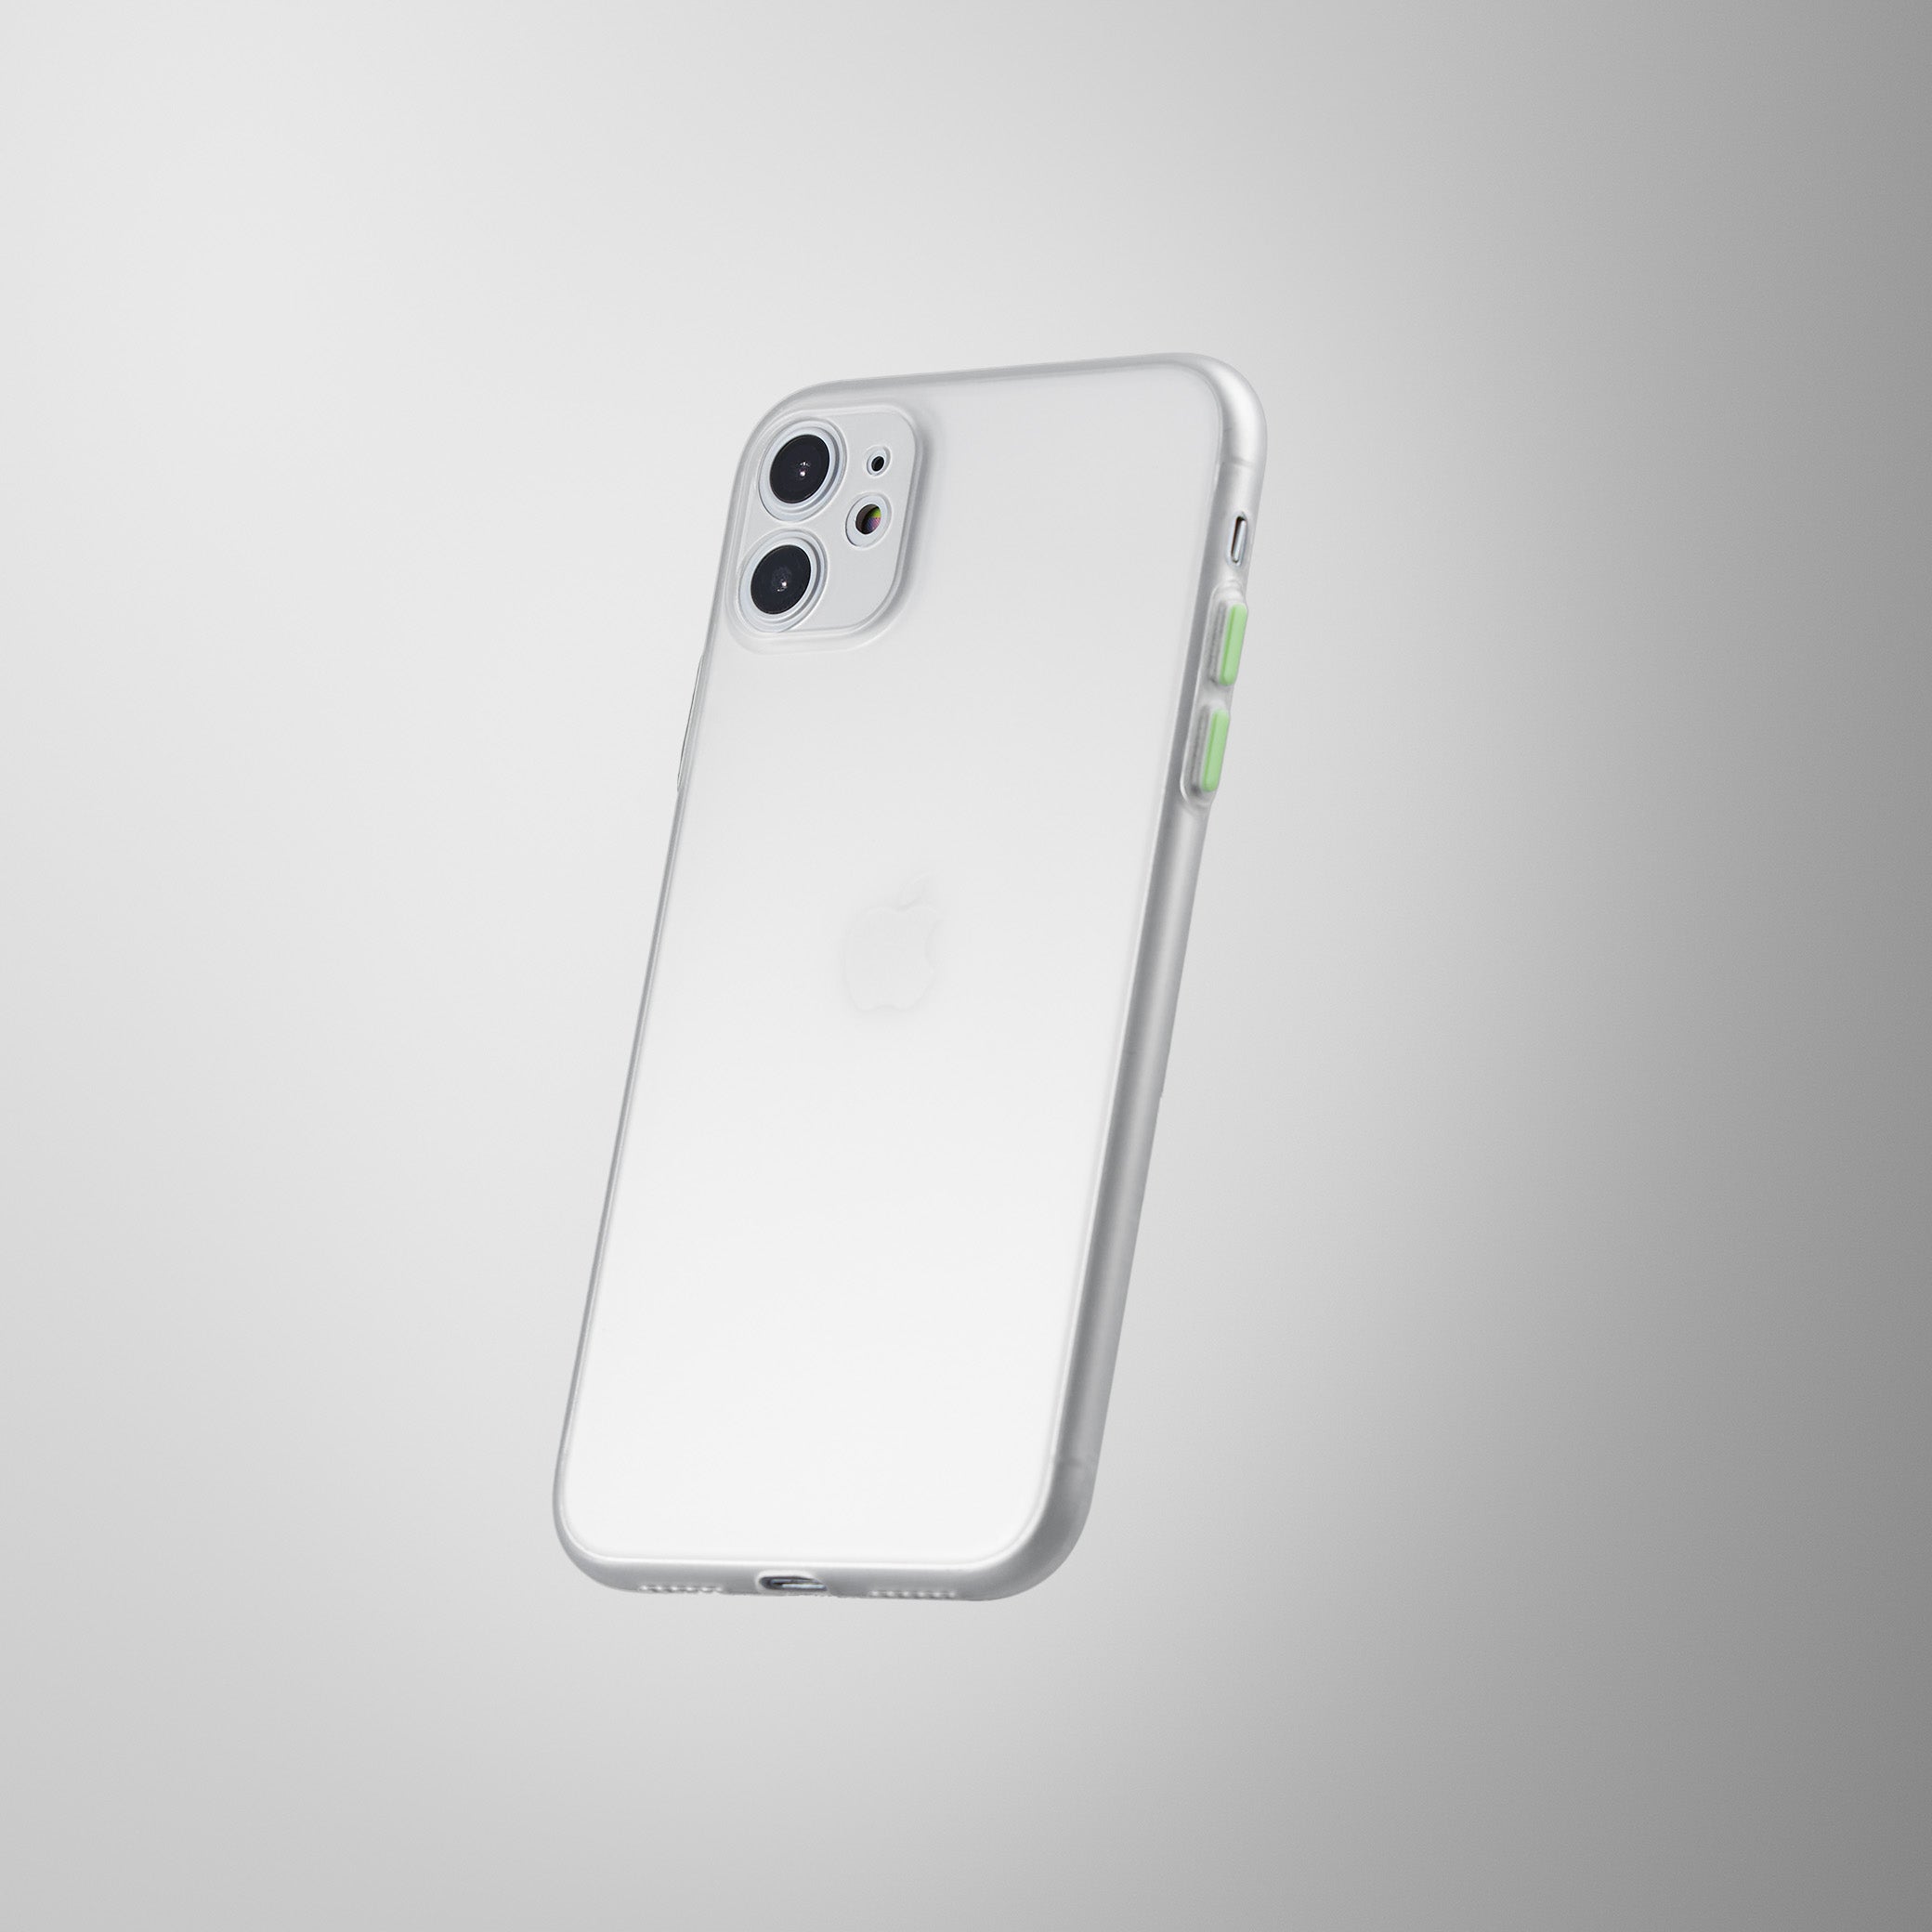 Super Slim Case 2.0 for iPhone 11 - Glazed Frost White